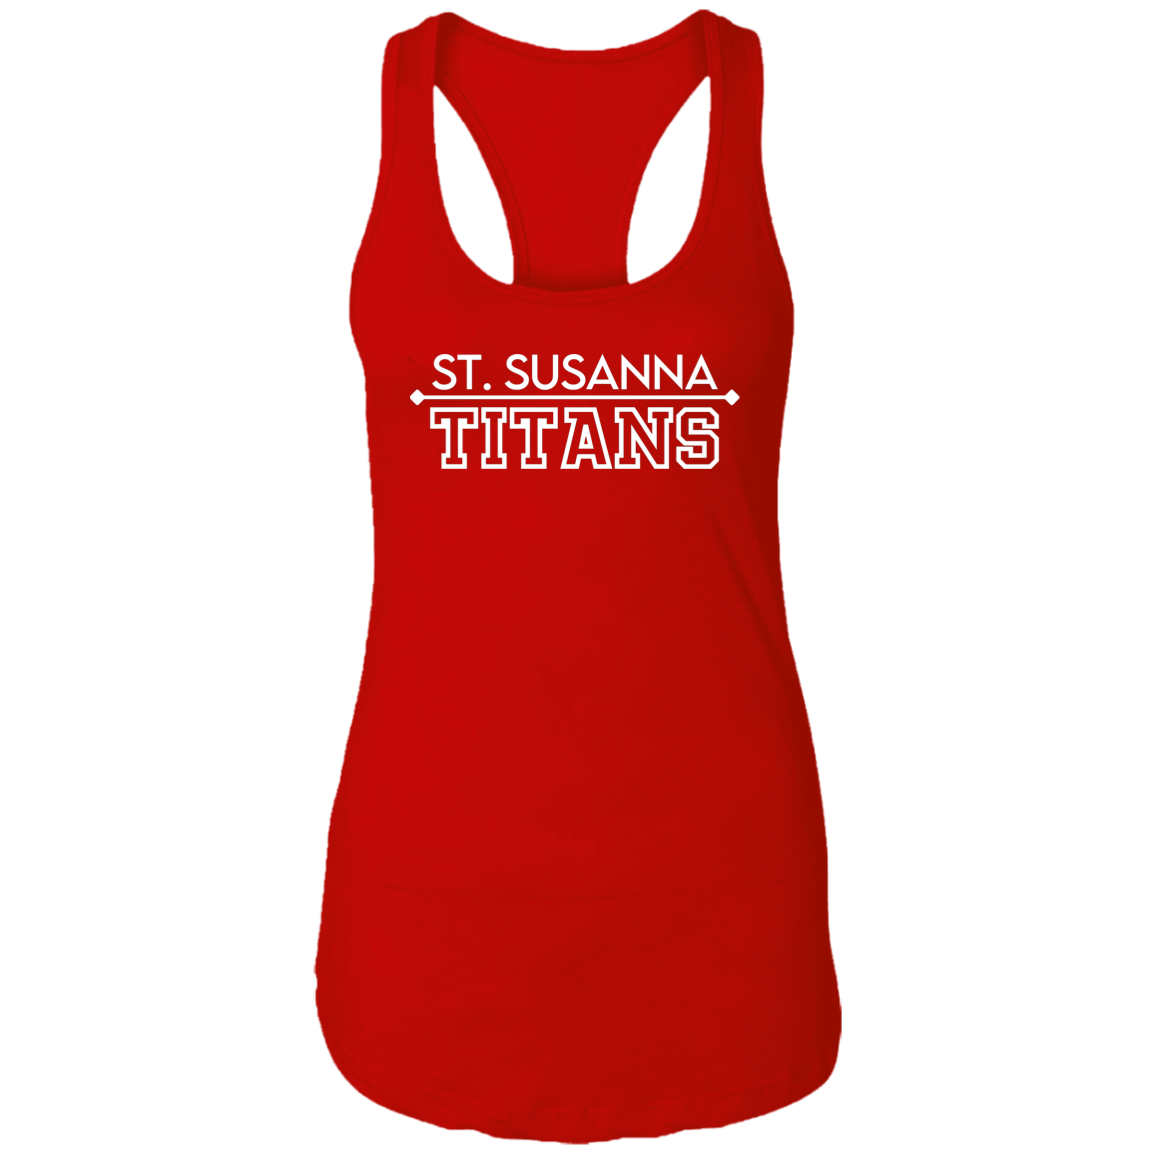 St. Susanna Titans (Red) Ladies Ideal Racerback Tank